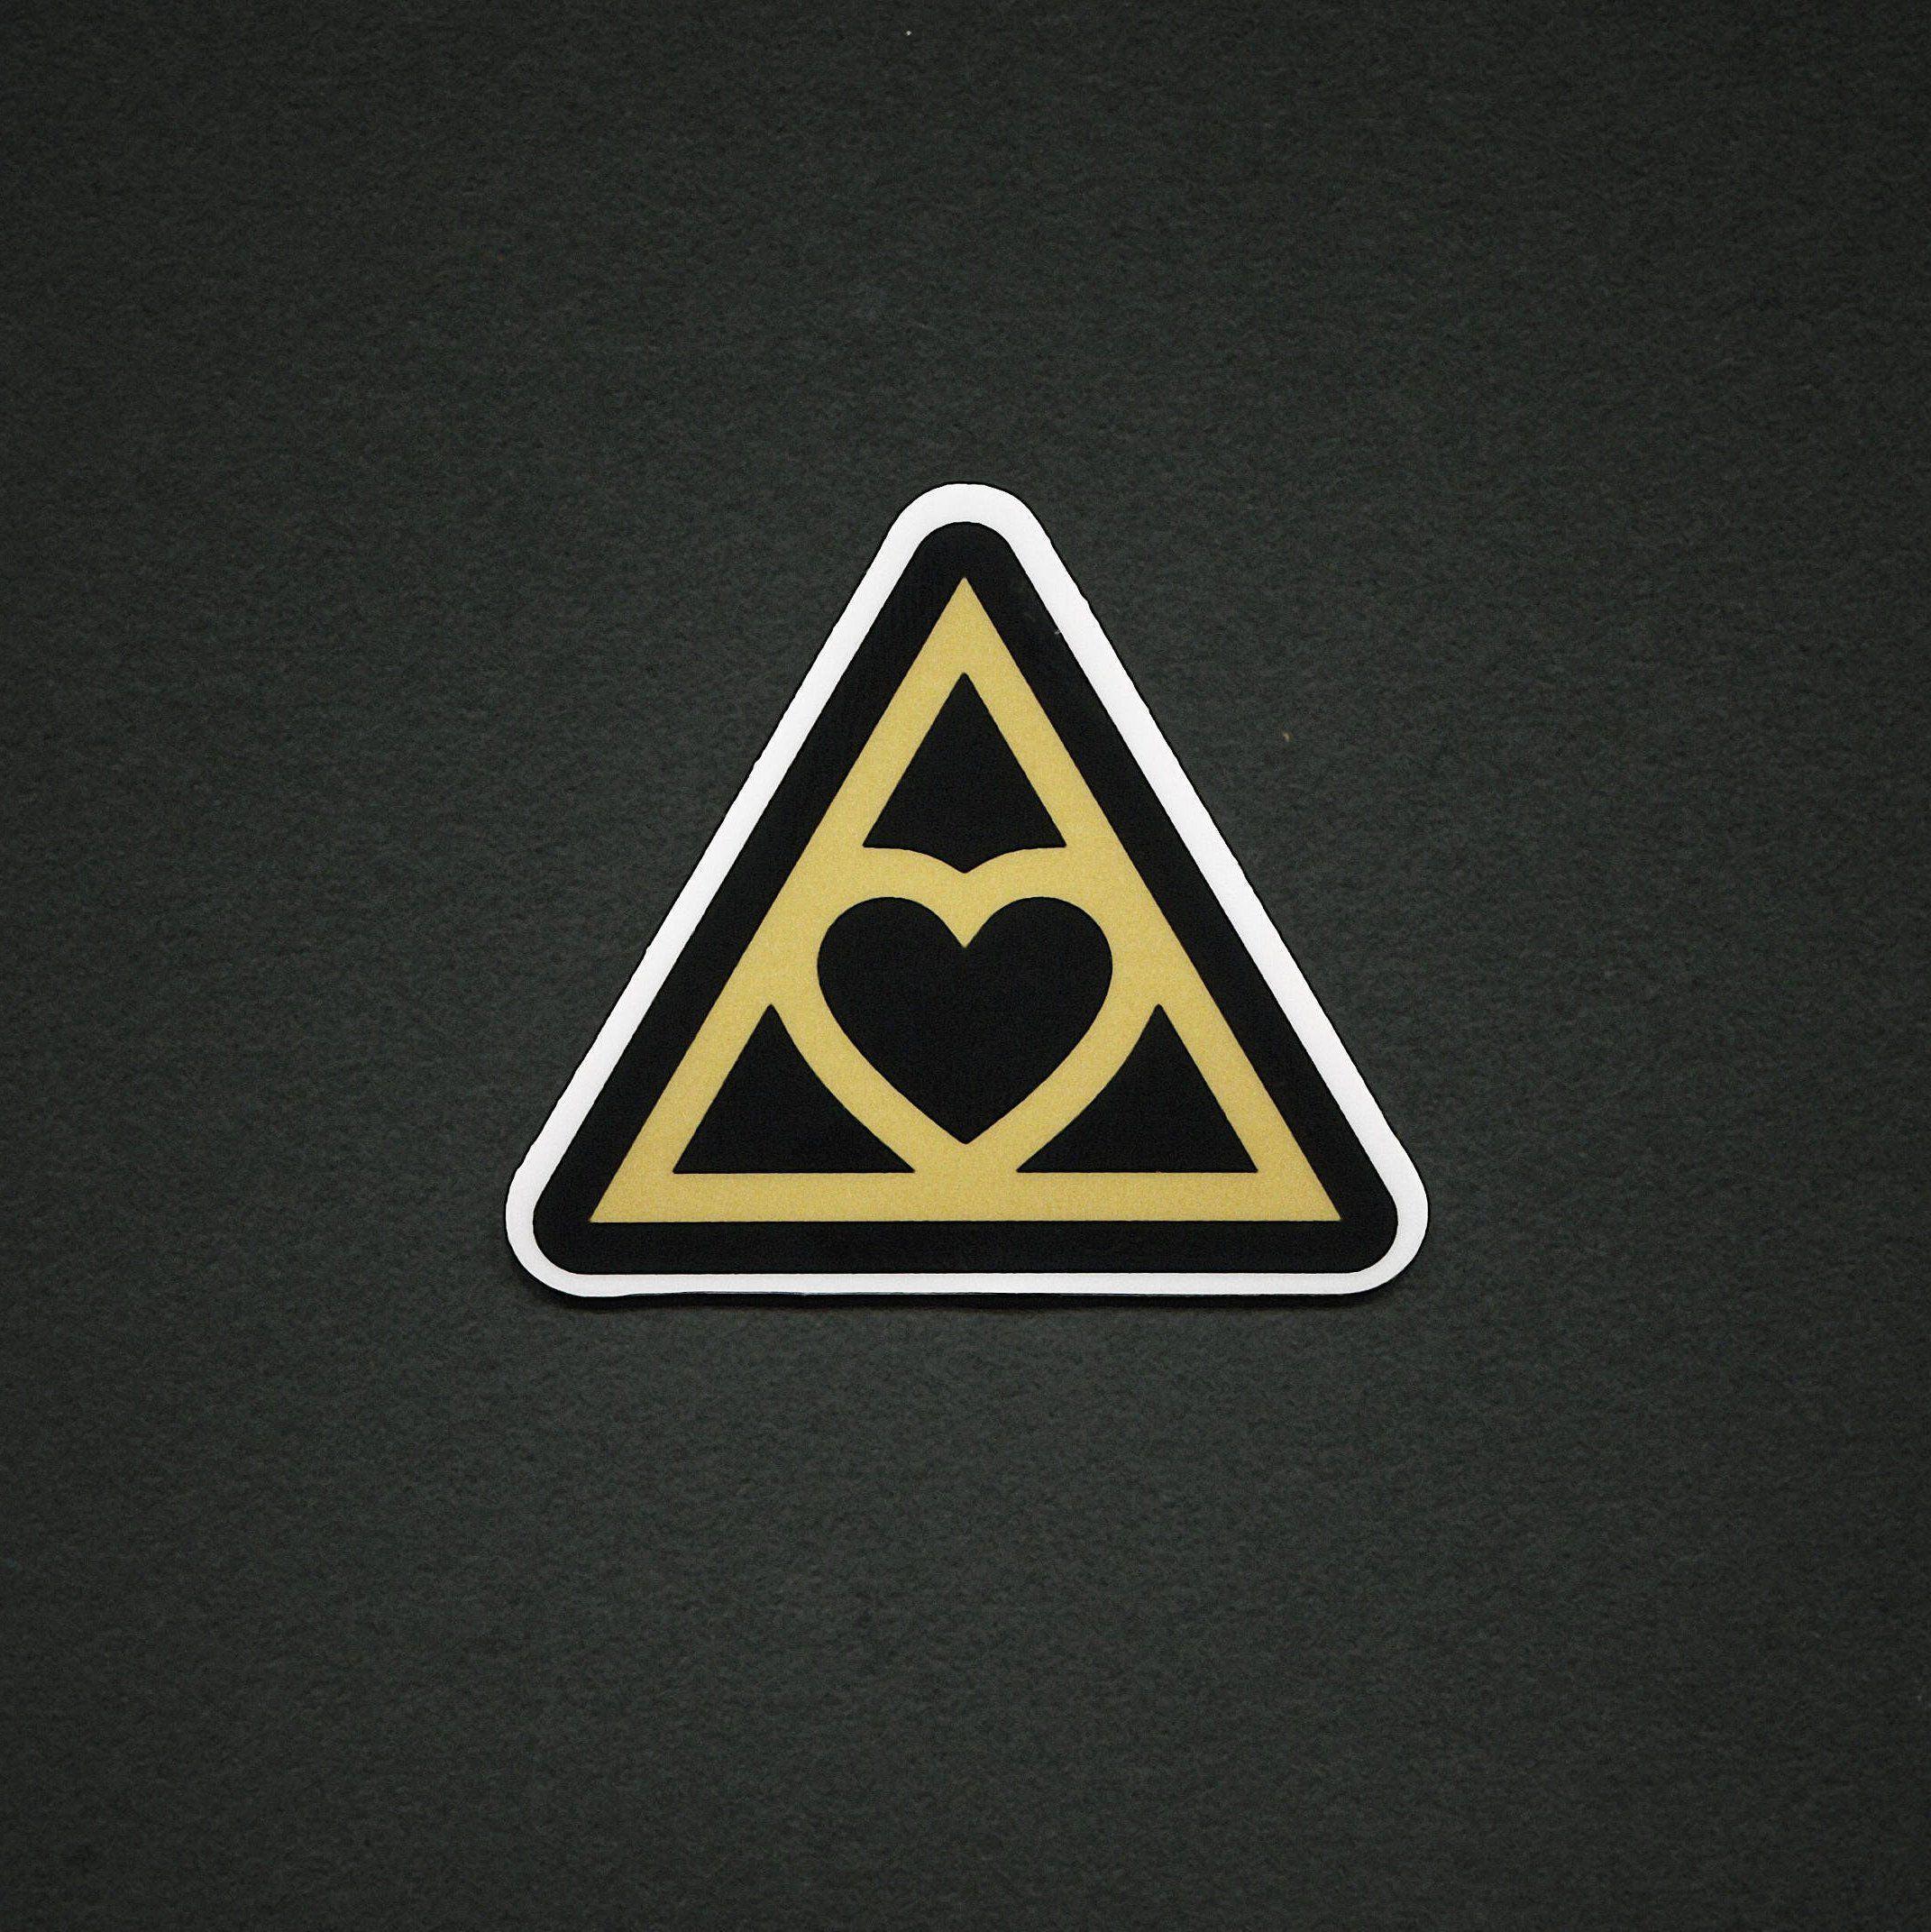 Heart in Triangle Logo - Heart Triangle Sticker | Starseed Supply Co.